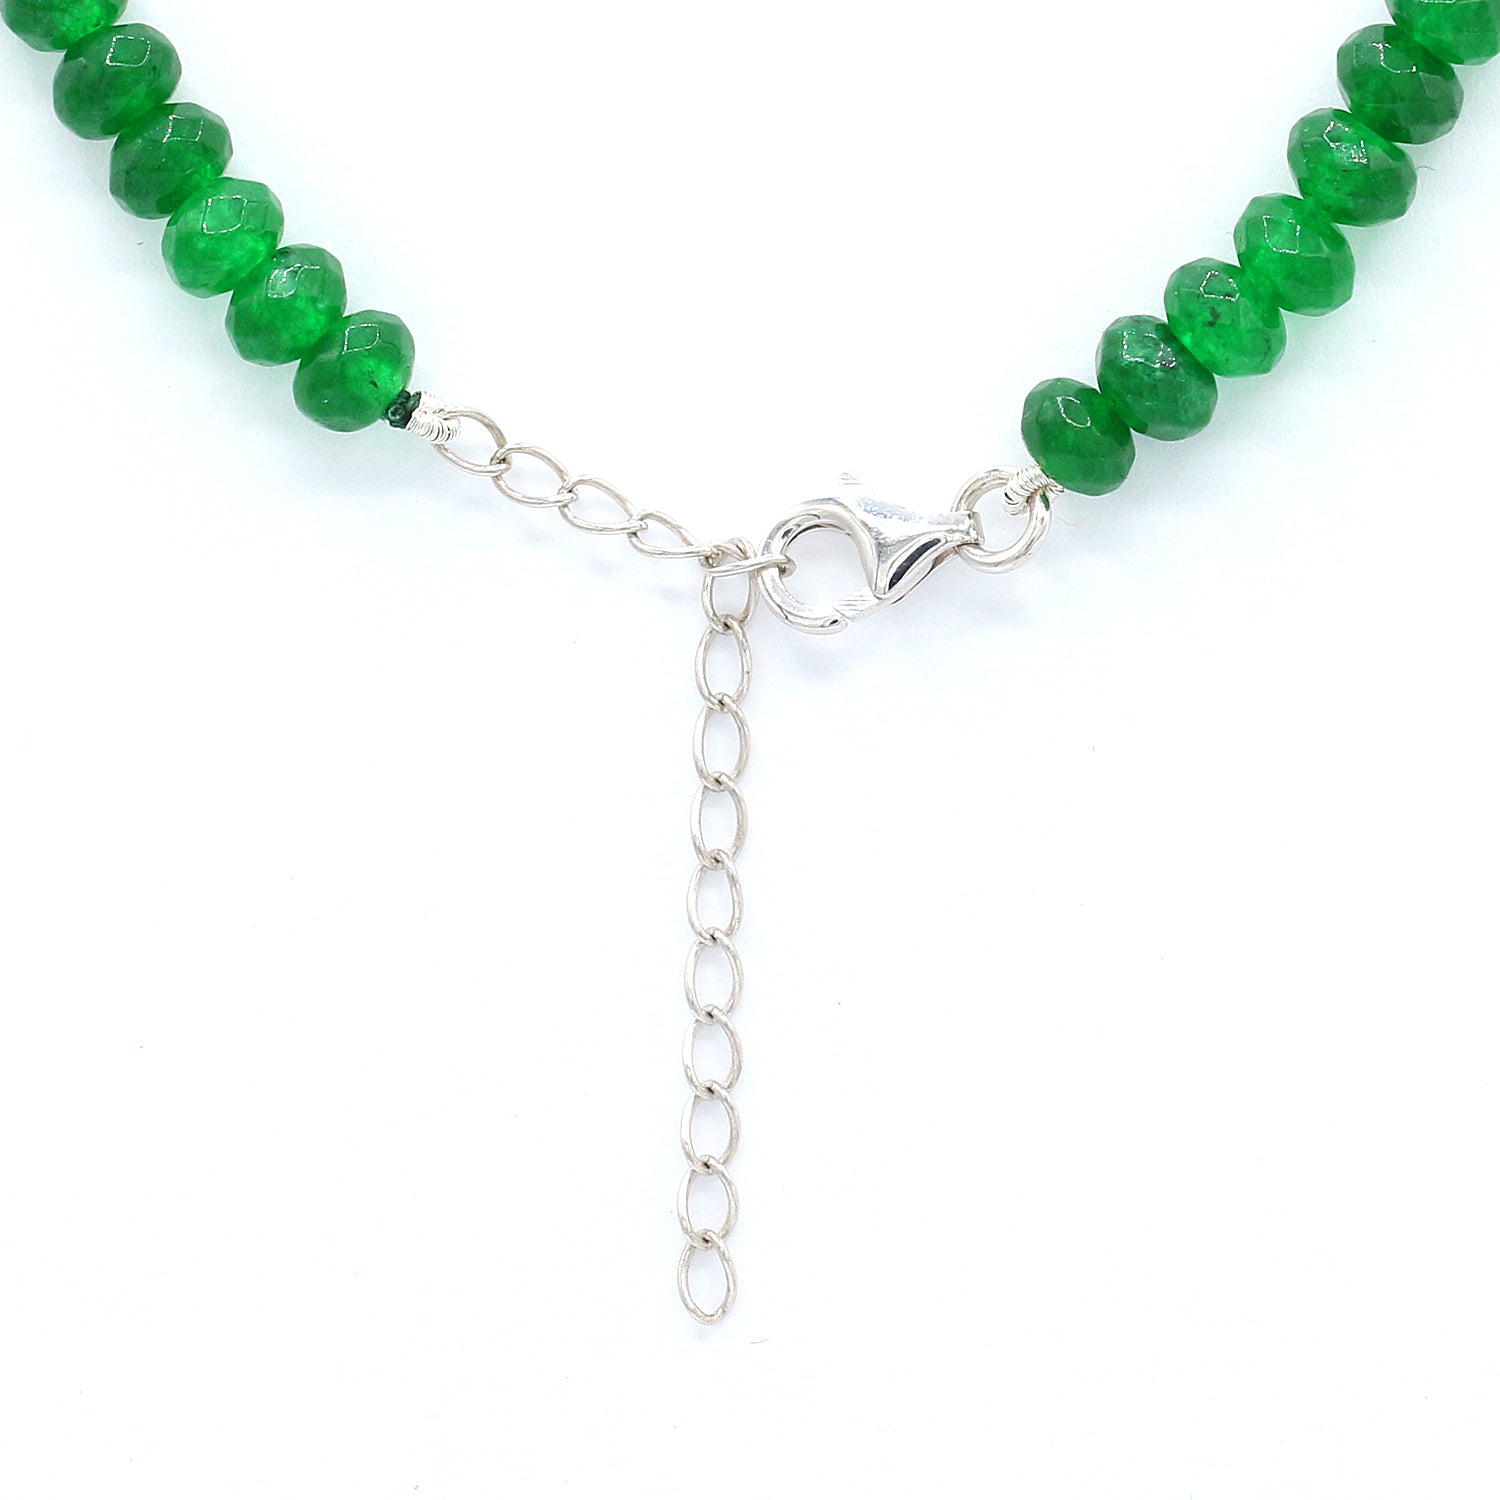 Gems en Vogue 5.36ctw Ouro Verde, White Zircon & Green Chalcedony Beaded Necklace